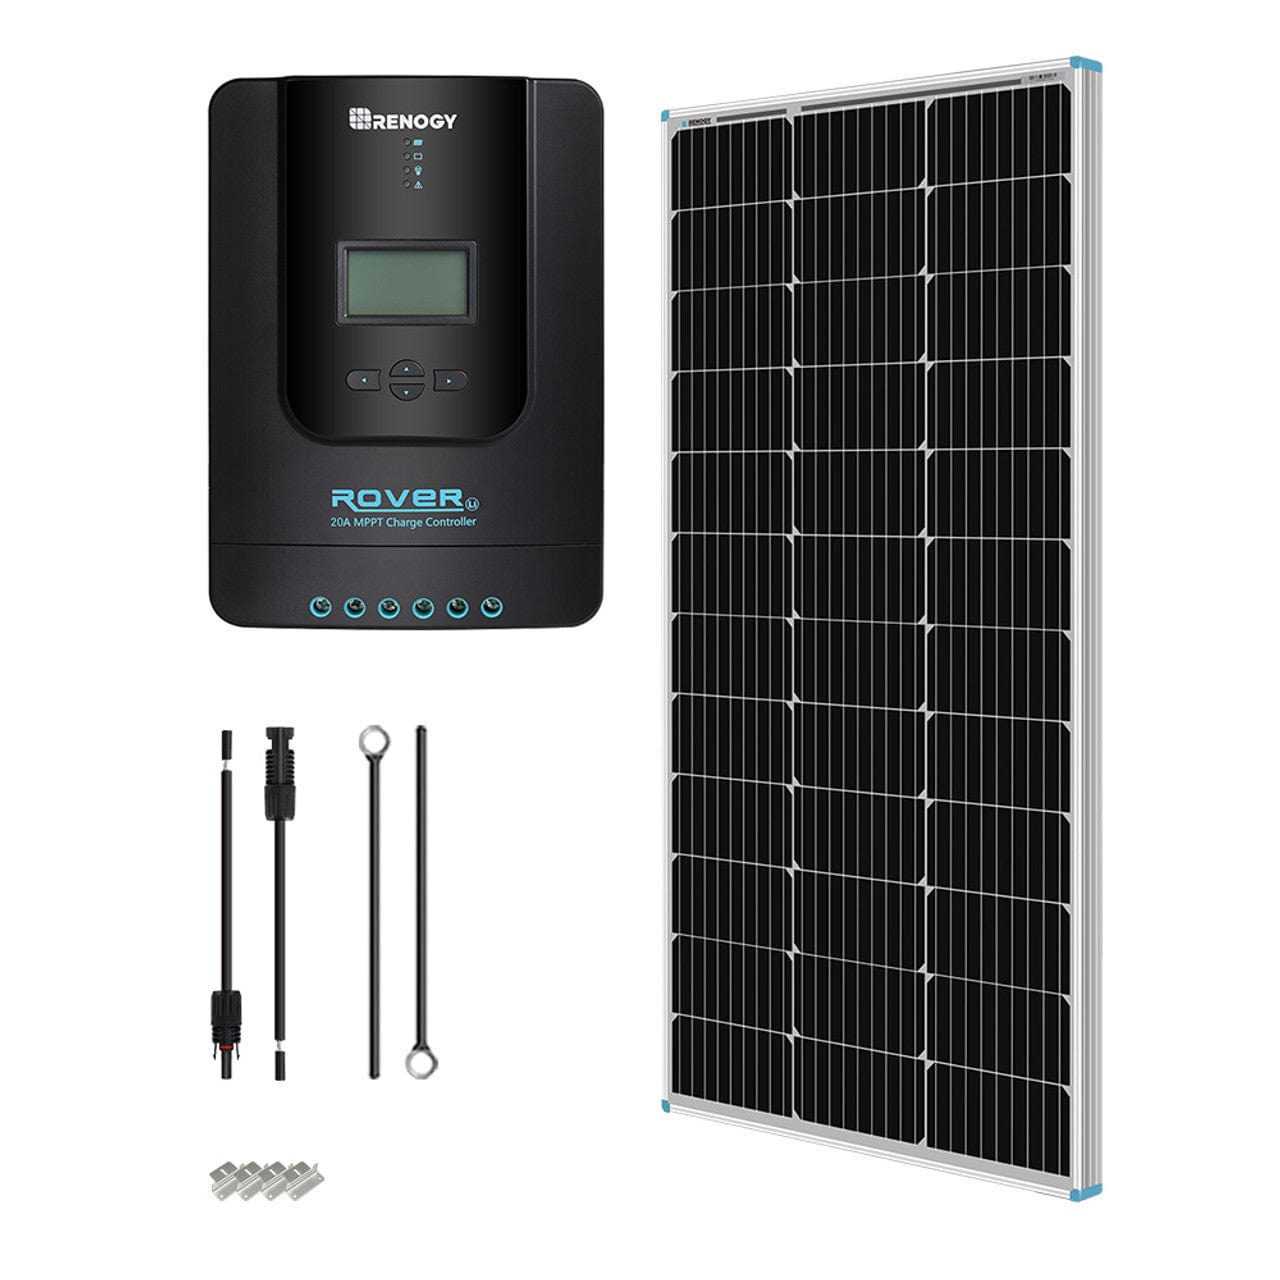 Renogy 100 Watt 12 Volt Solar Starter Kit with 20A/40A MPPT Charge Controller Renogy Option 1: 20A MPPT Charge Controller Solar Power Kits